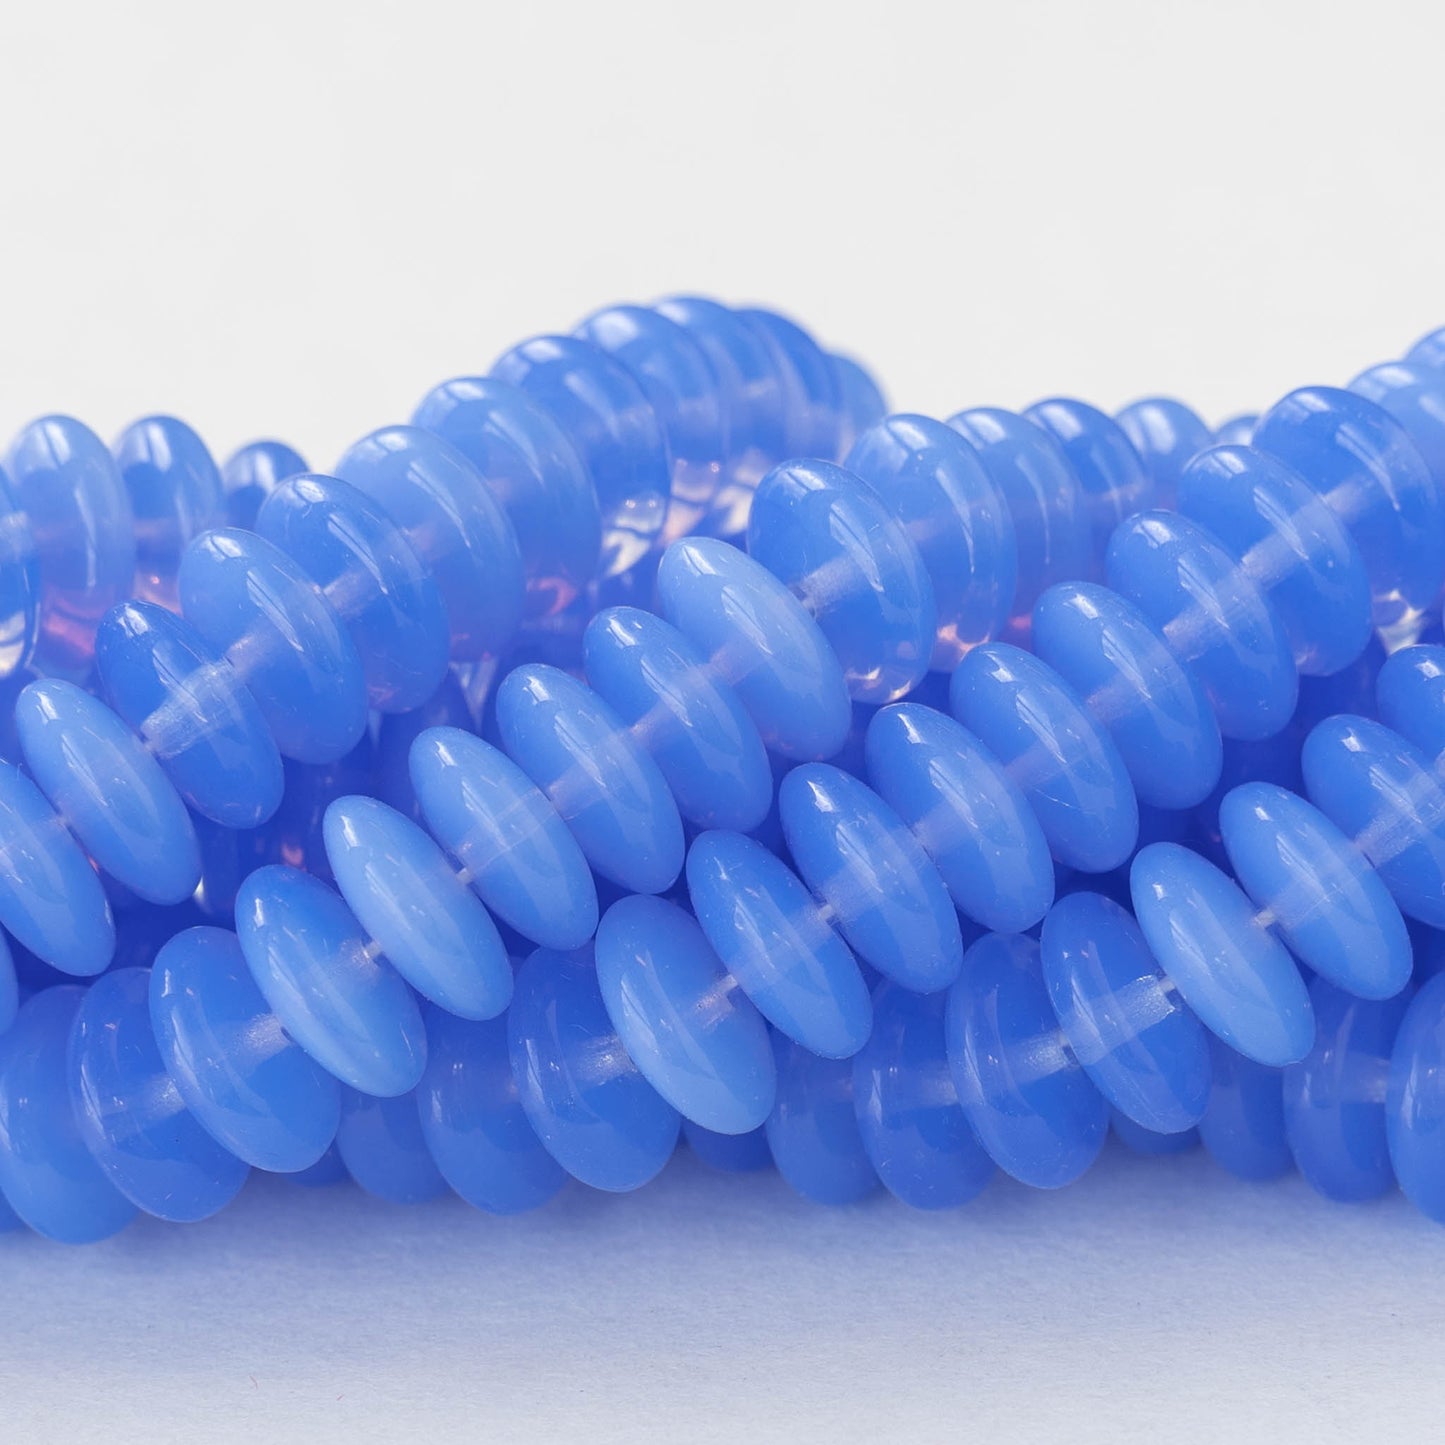 10mm Glass Rondelle Beads - Lt. Blue Opaline - 30 Beads